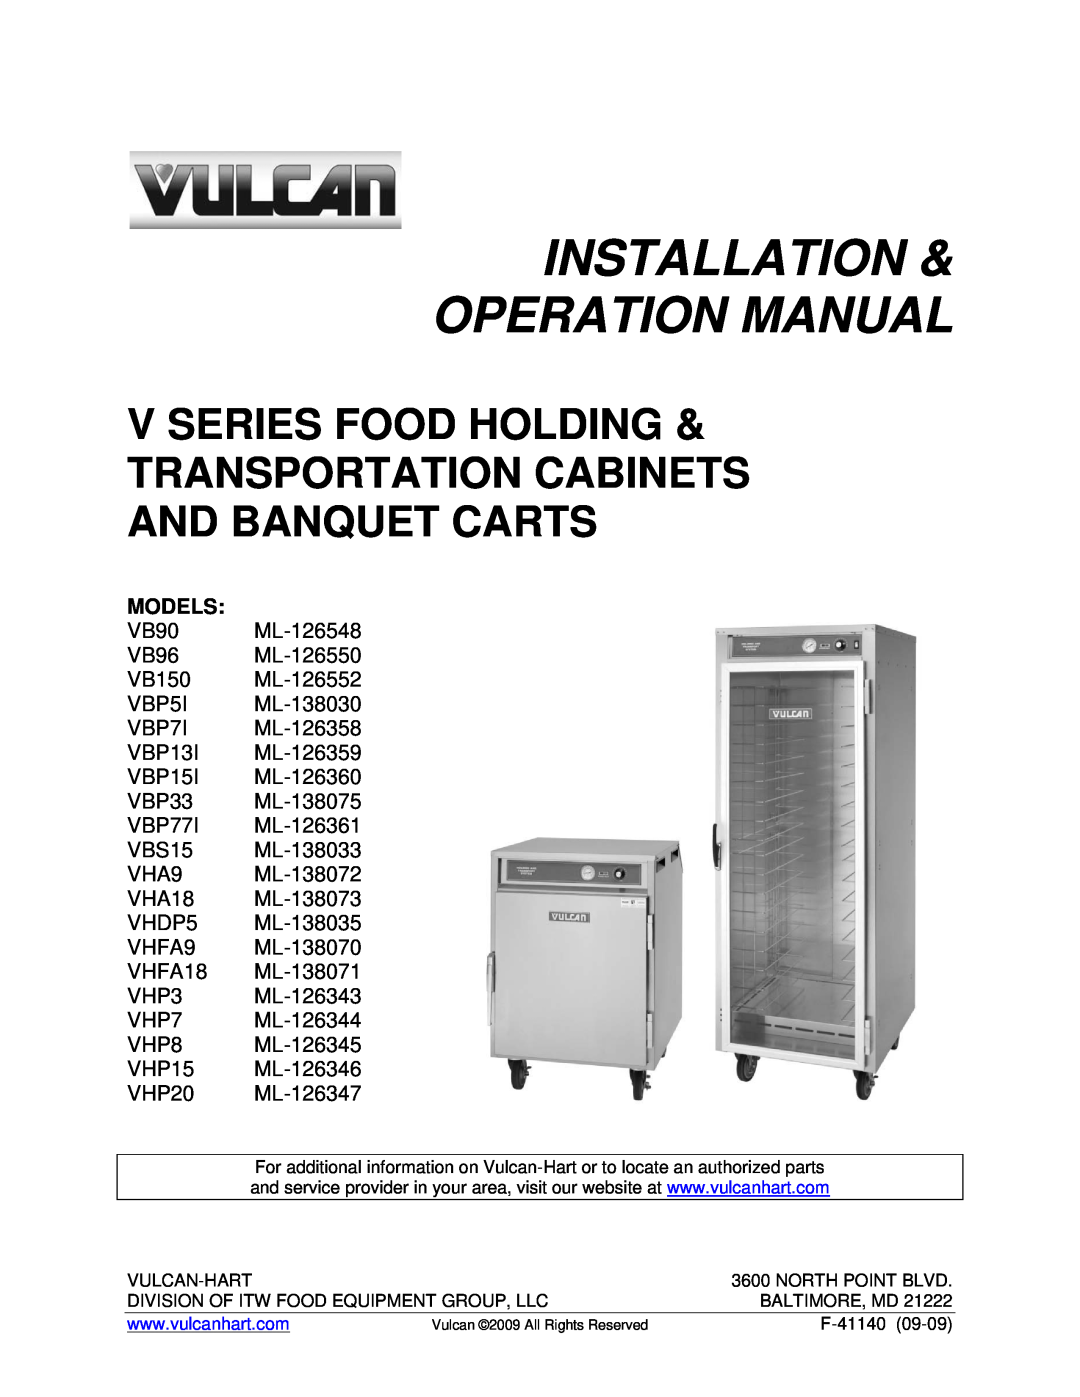 Vulcan-Hart VHA18 ML-138073, VHFA18 ML-138071, VHDP5 ML-138035, VHA9 ML-138072, VHFA9 ML-138070 operation manual Models 